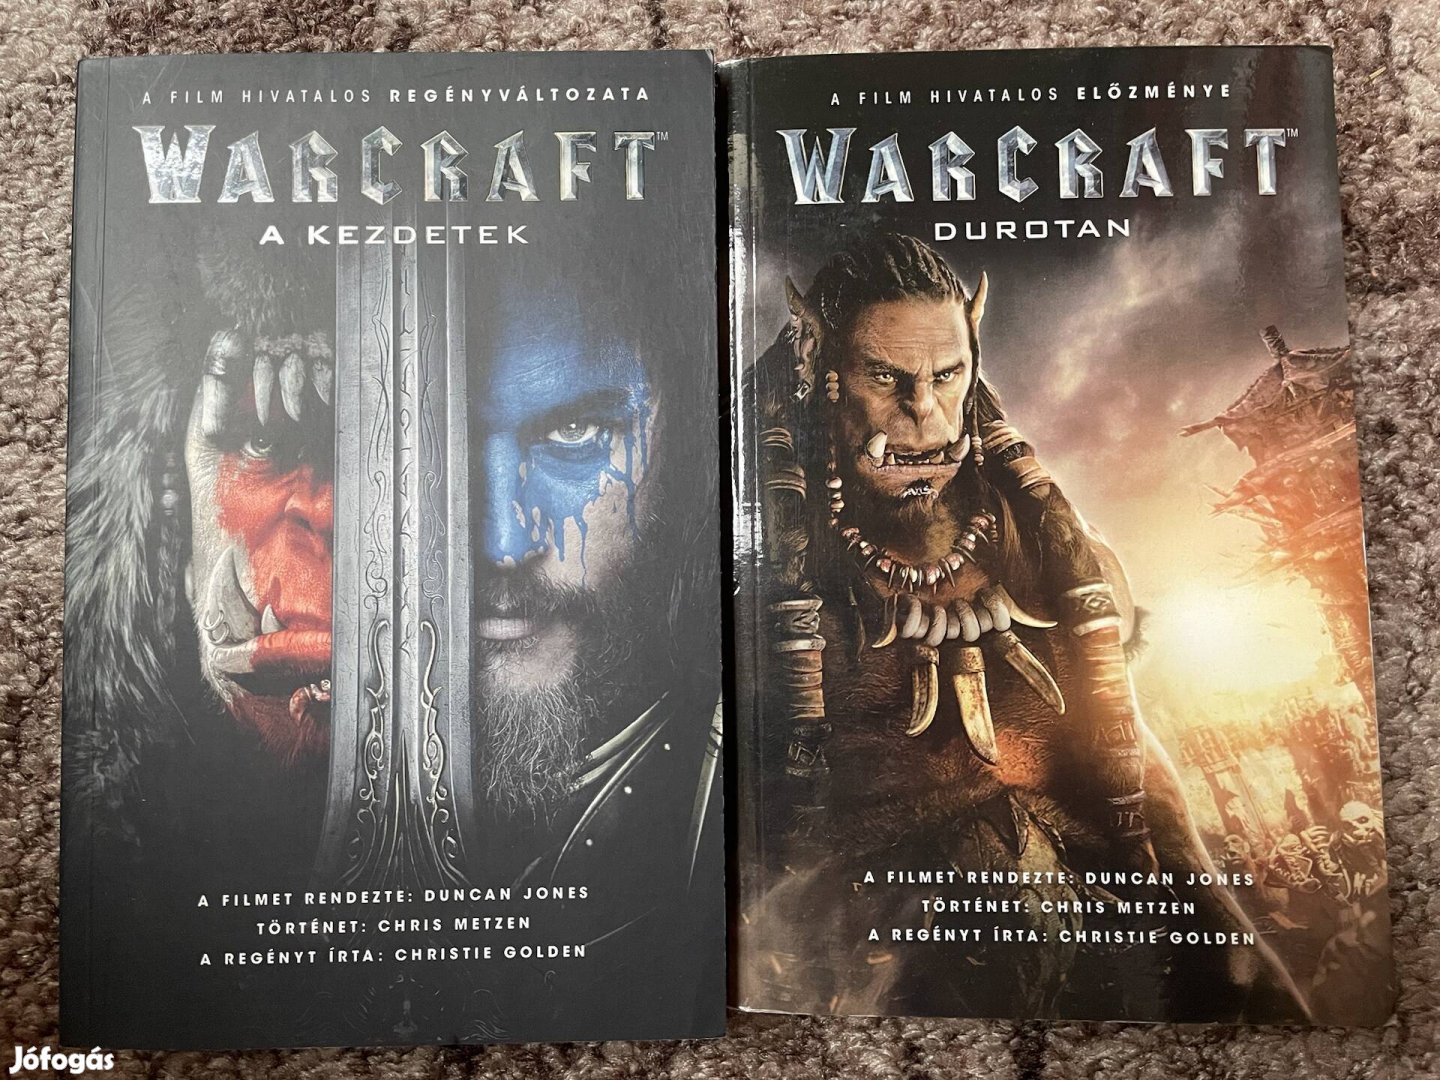 Christie Golden: Warcraft - Durotan; A kezdetek